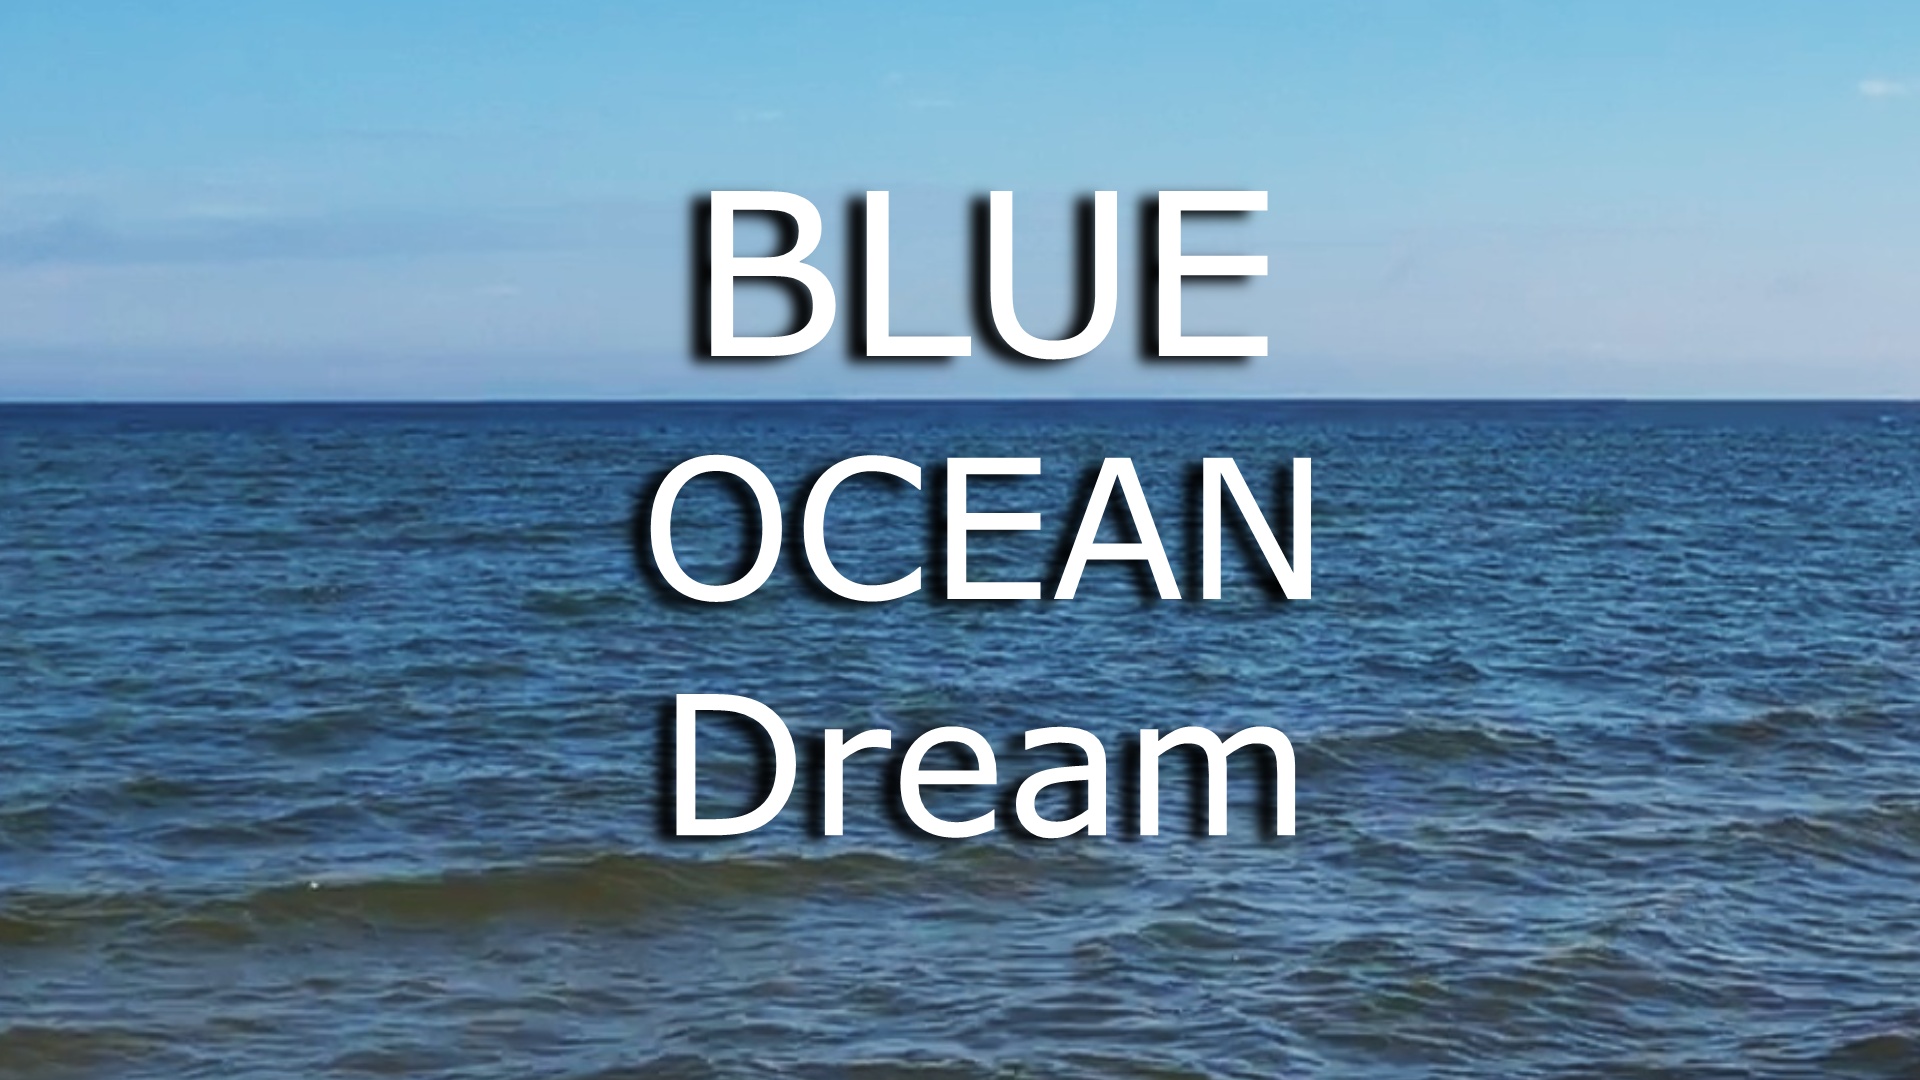 blue ocean dream meaning